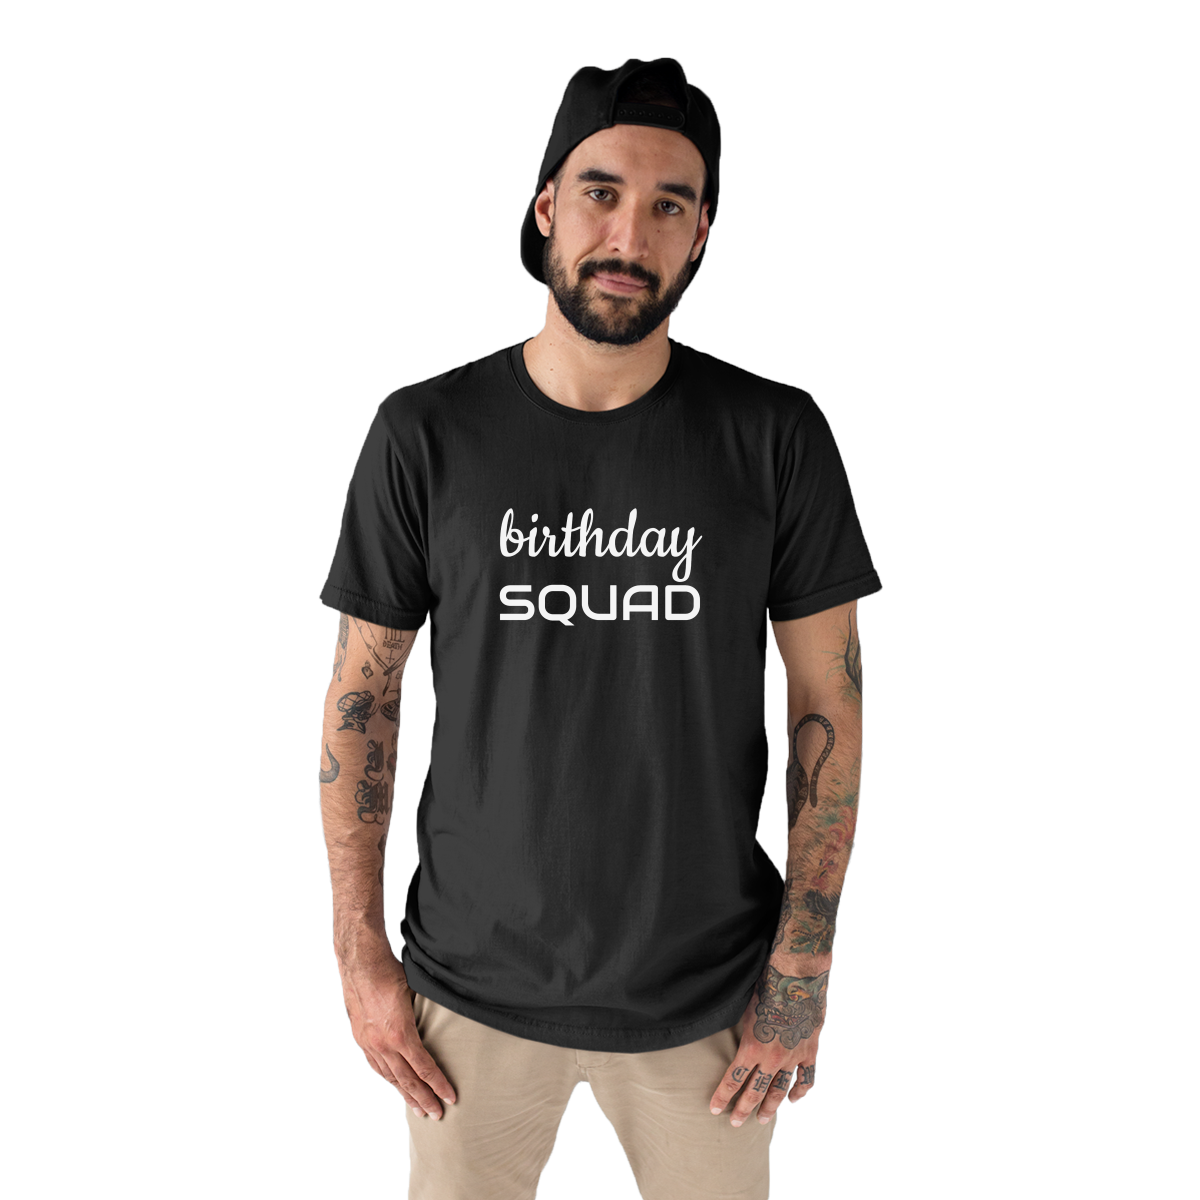 Birthday SQUAD Men's T-shirt | Black